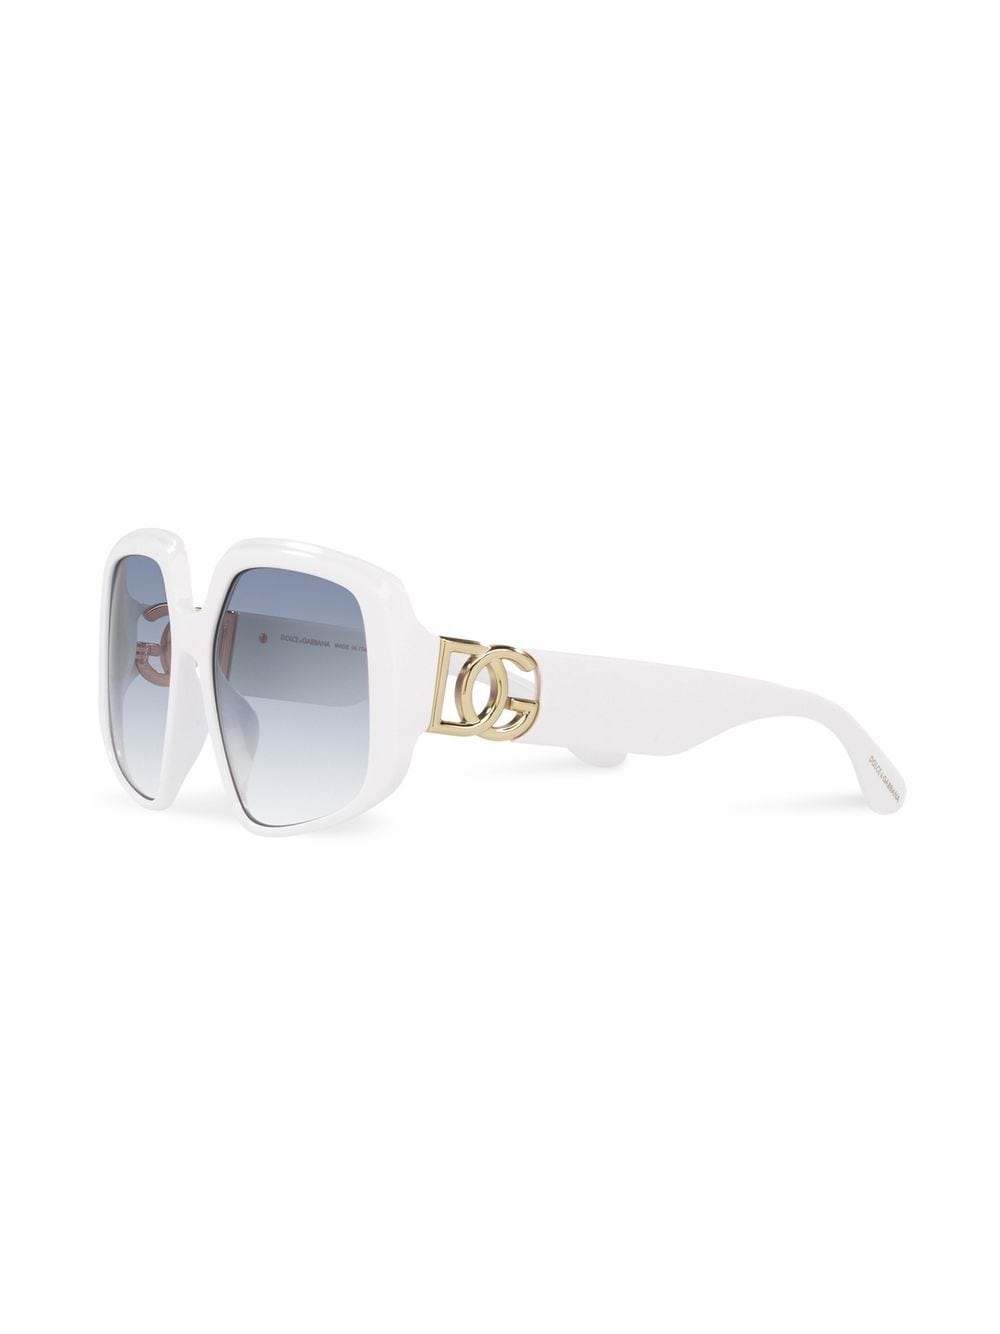 Dolce & Gabbana Eyewear Blu Mediterraneo sunglasses - Wit